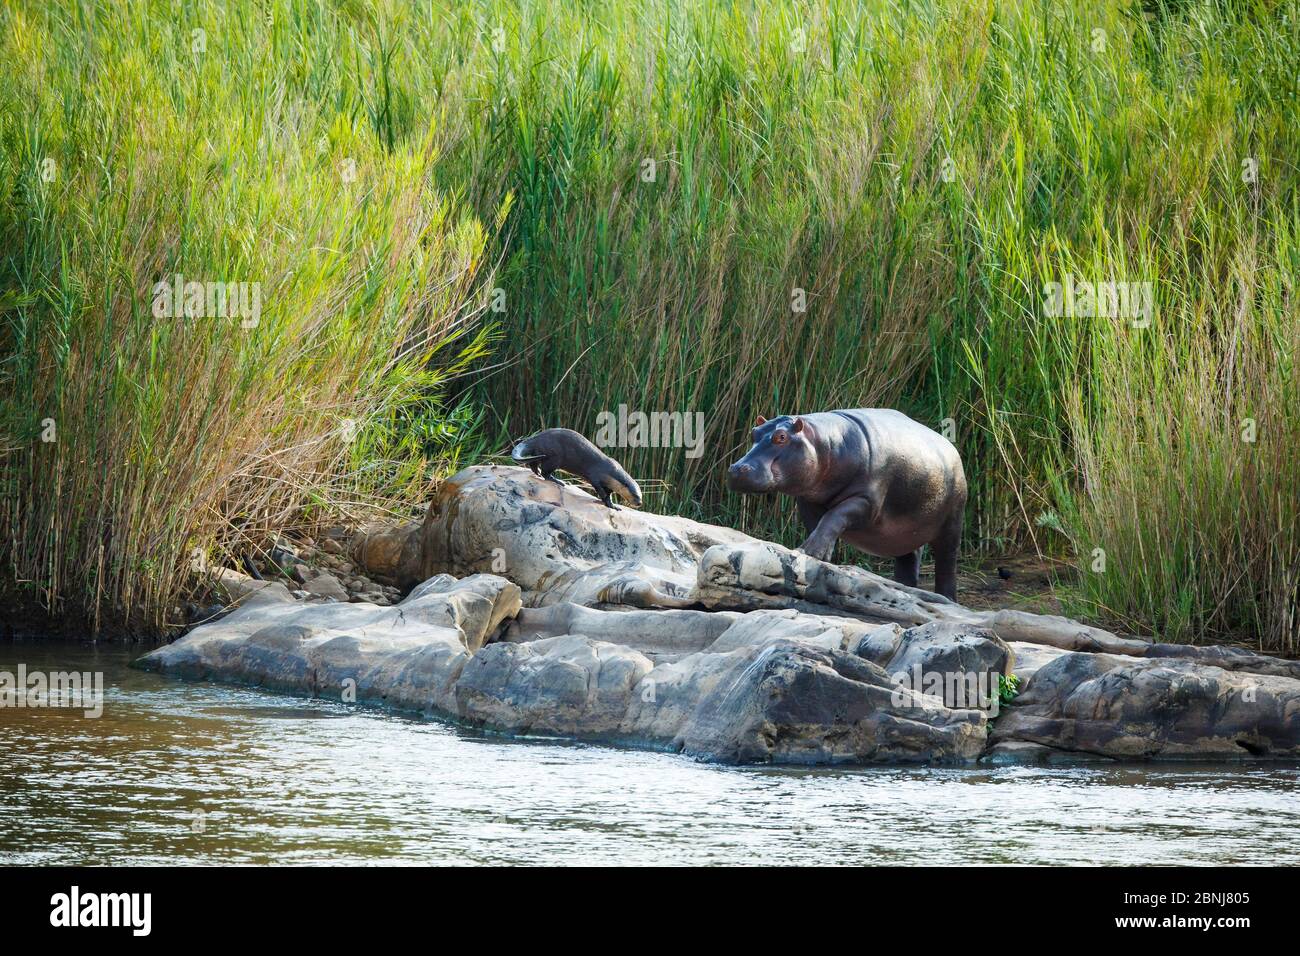 Kap-Tampferotter (Aonyx capensis) und Hippopotamus (Hippopotamus amphibius) am Ufer, Kruger-Nationalpark, Südafrika, Mpumalanga Provinz, Süd Stockfoto